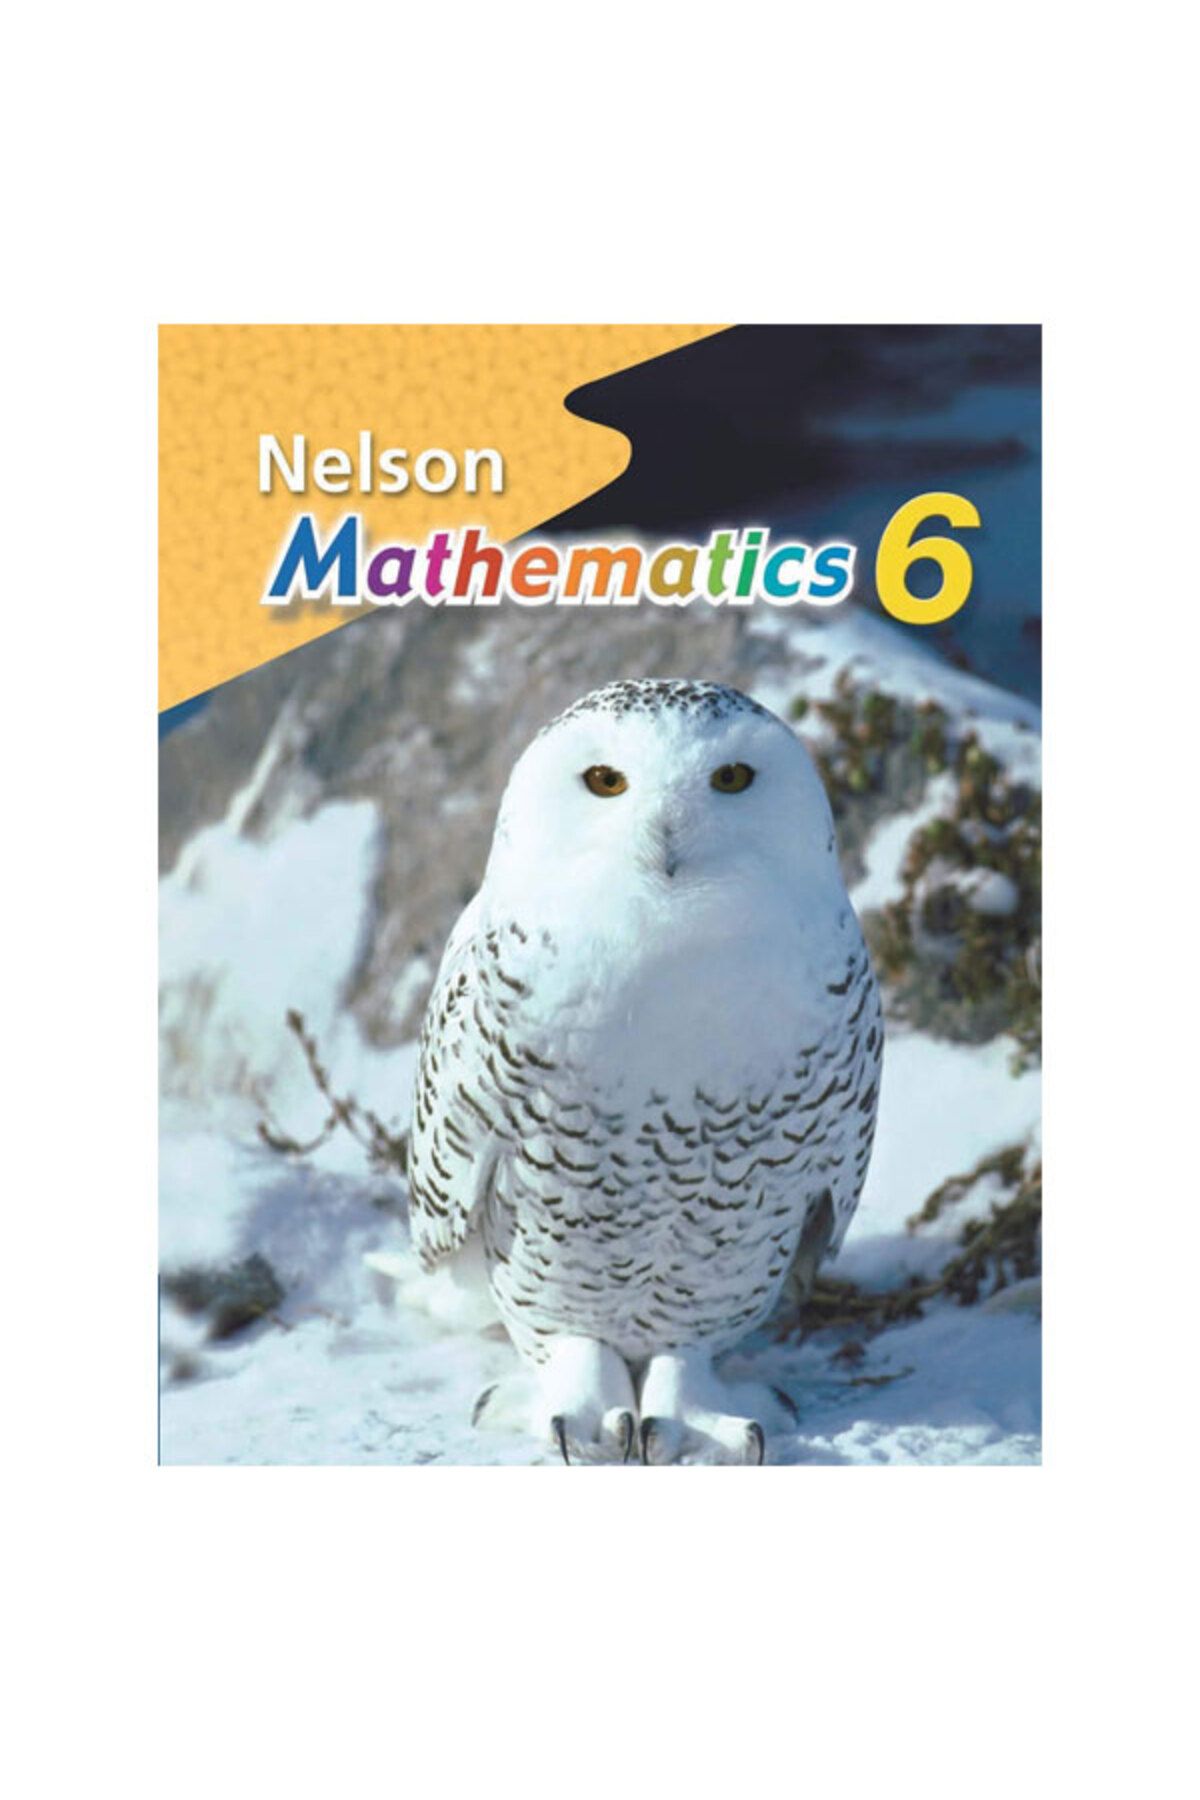 Nelson Mathematics 6 Student Book Student Text & Onlinepdf